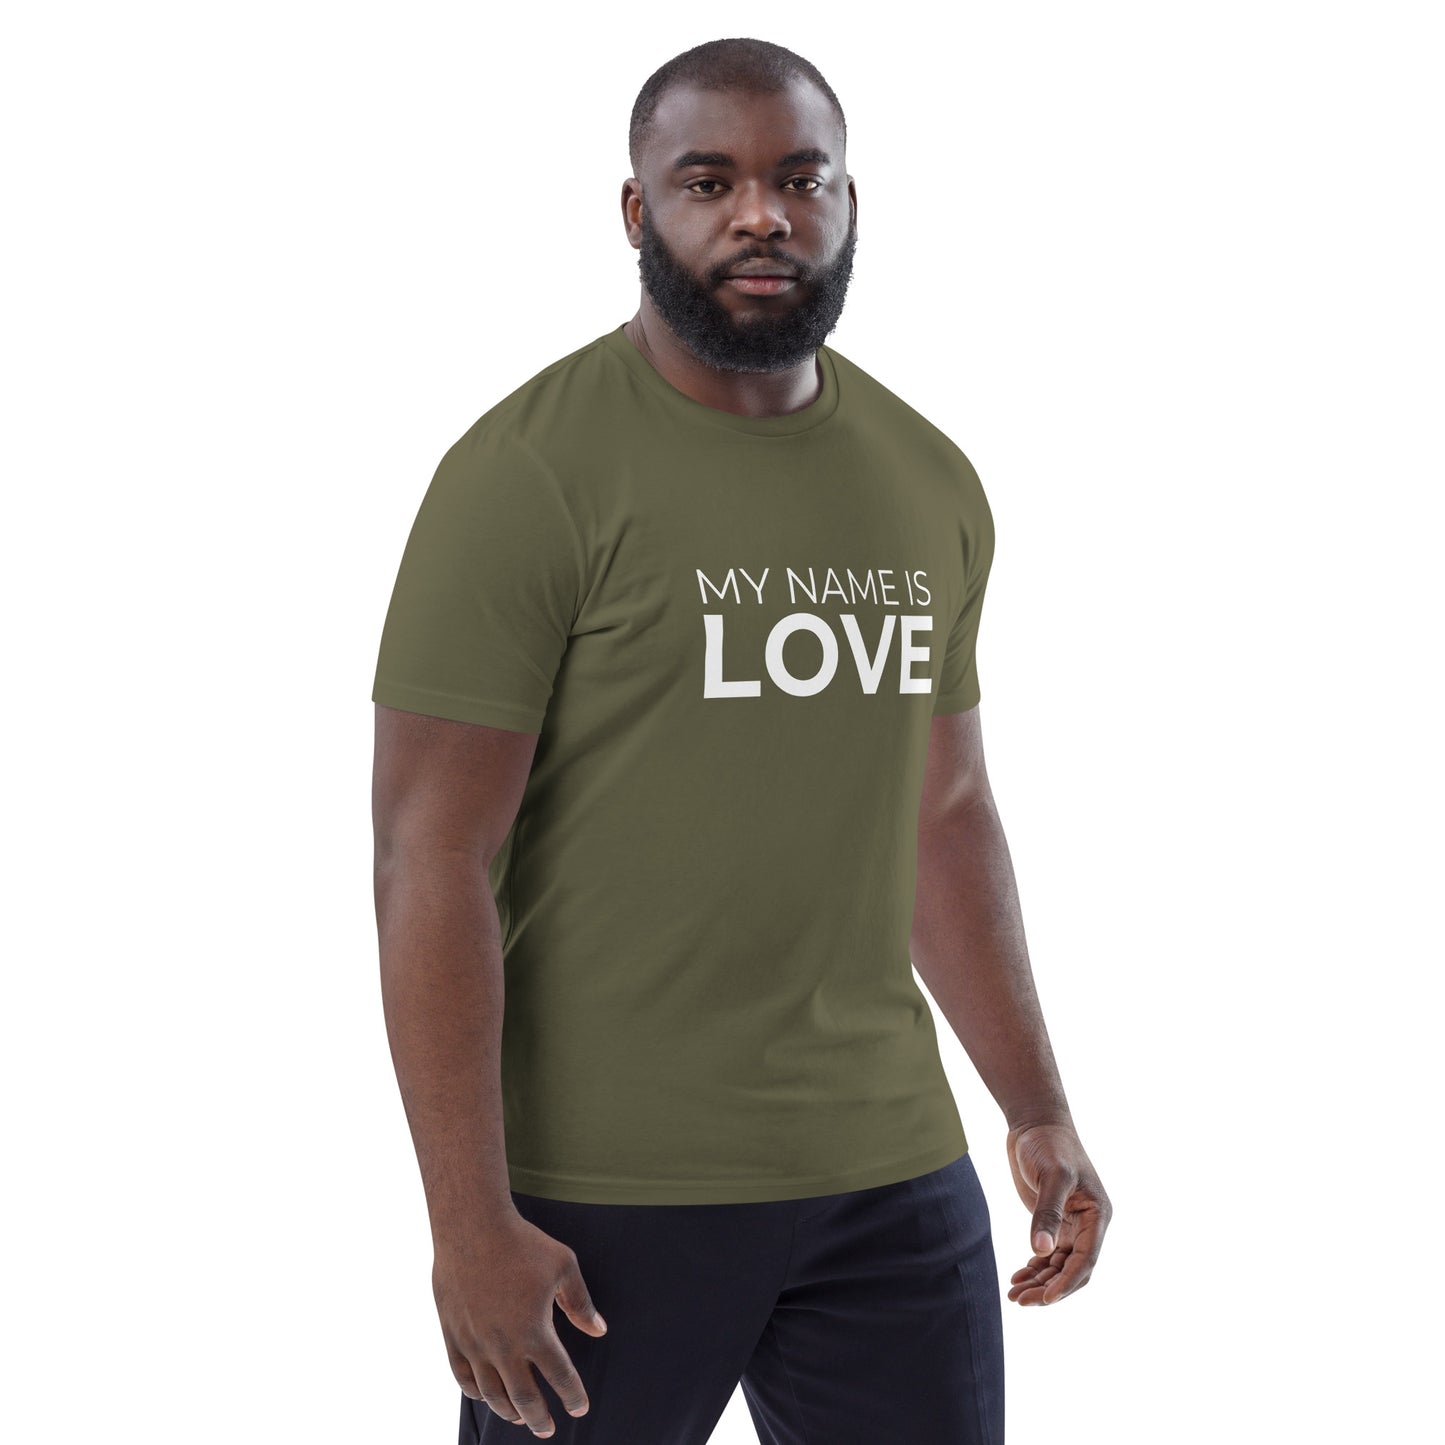 My Name Is Love: Unisex organic cotton t-shirt